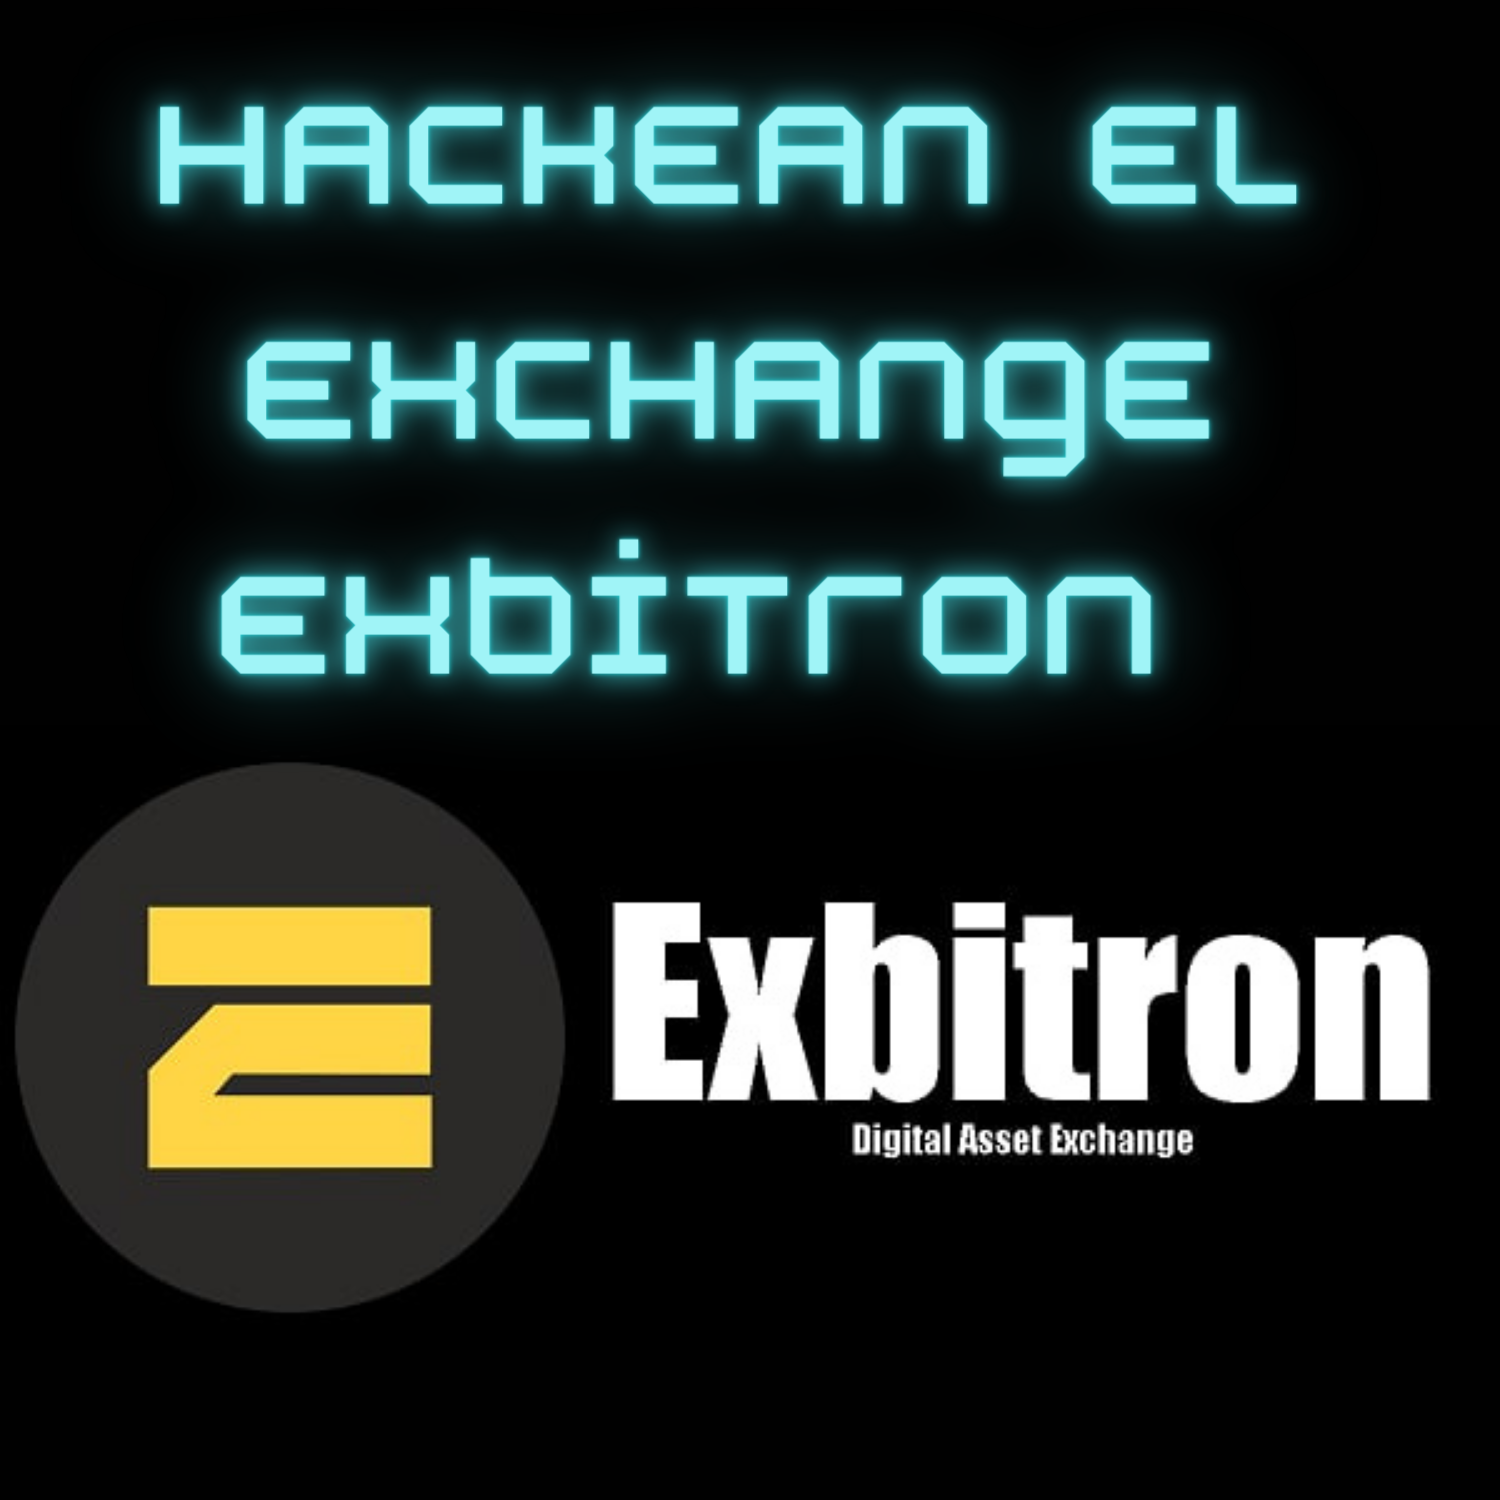 Hackean el exchange Exbitron